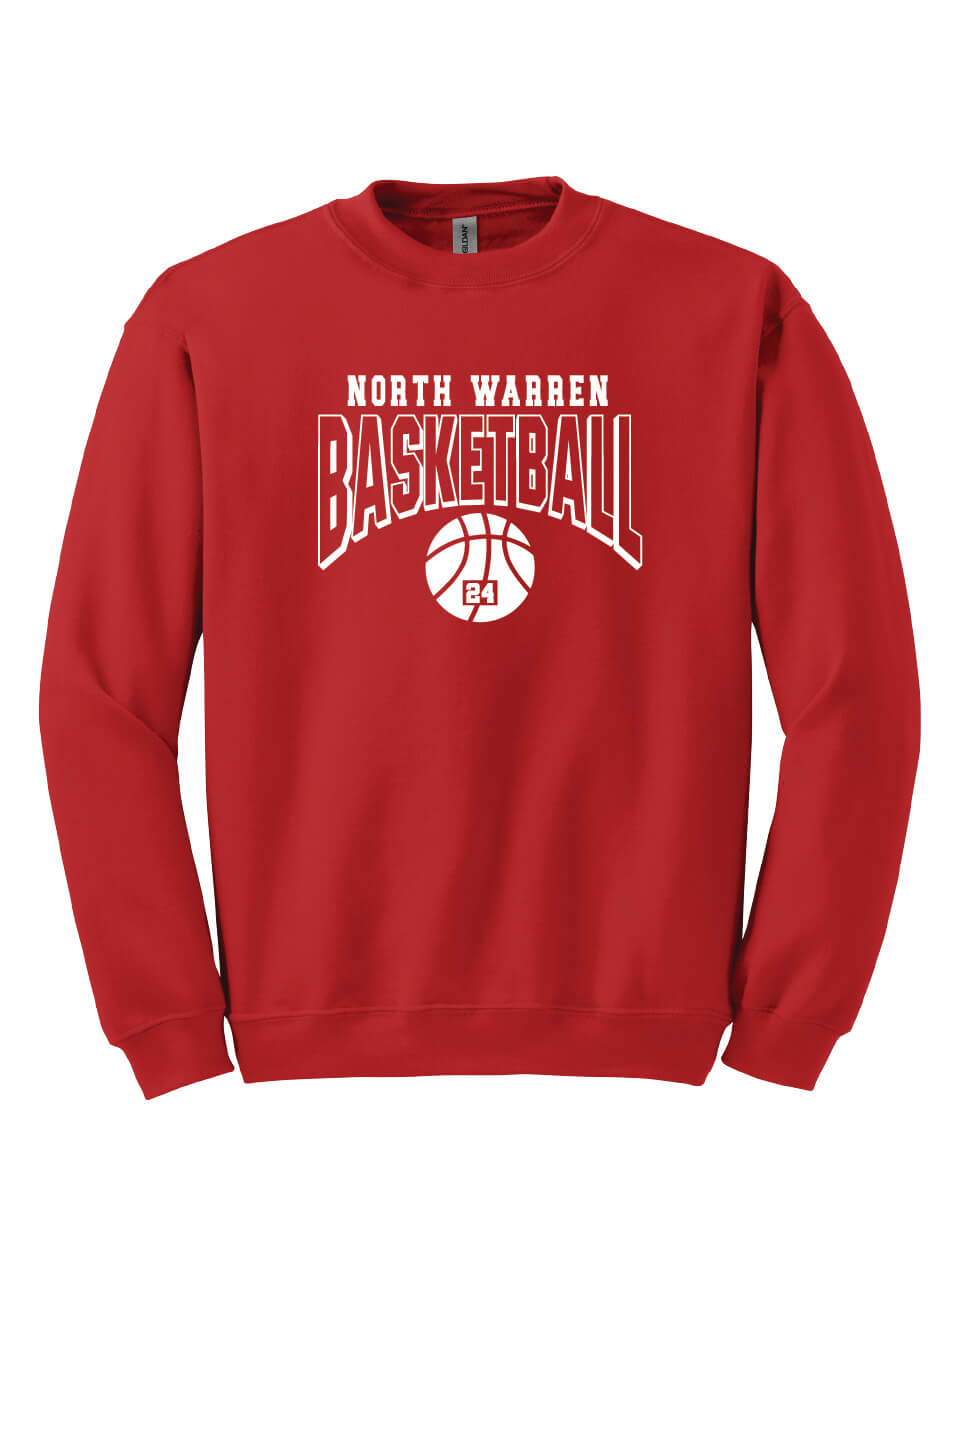 Basketball Crewneck Sweatshirt (Youth) red